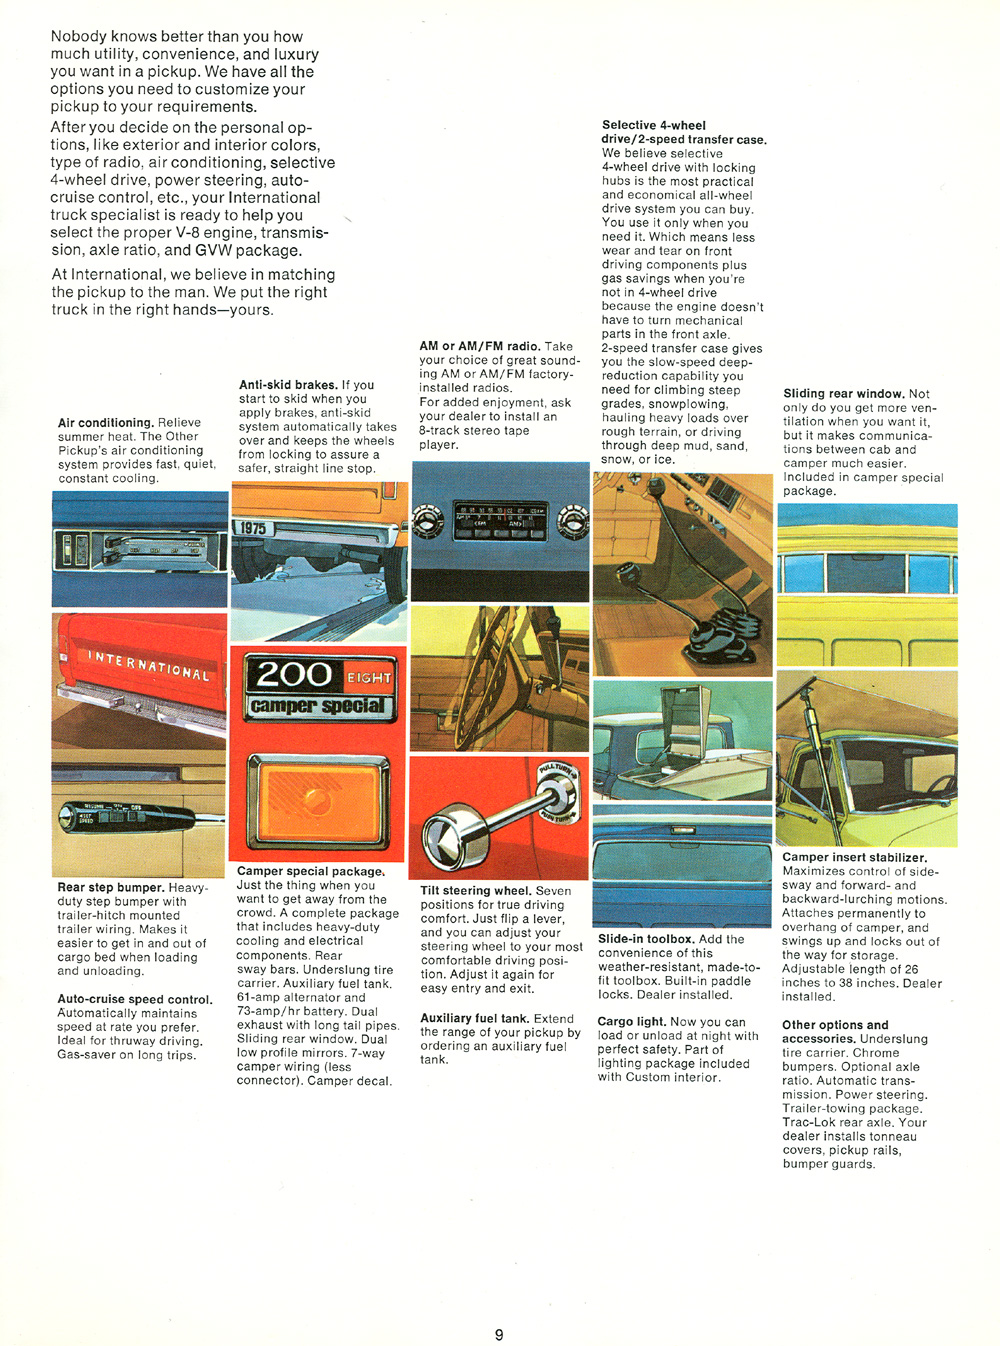 1975 International Recreational Vehicles Brochure Page 18